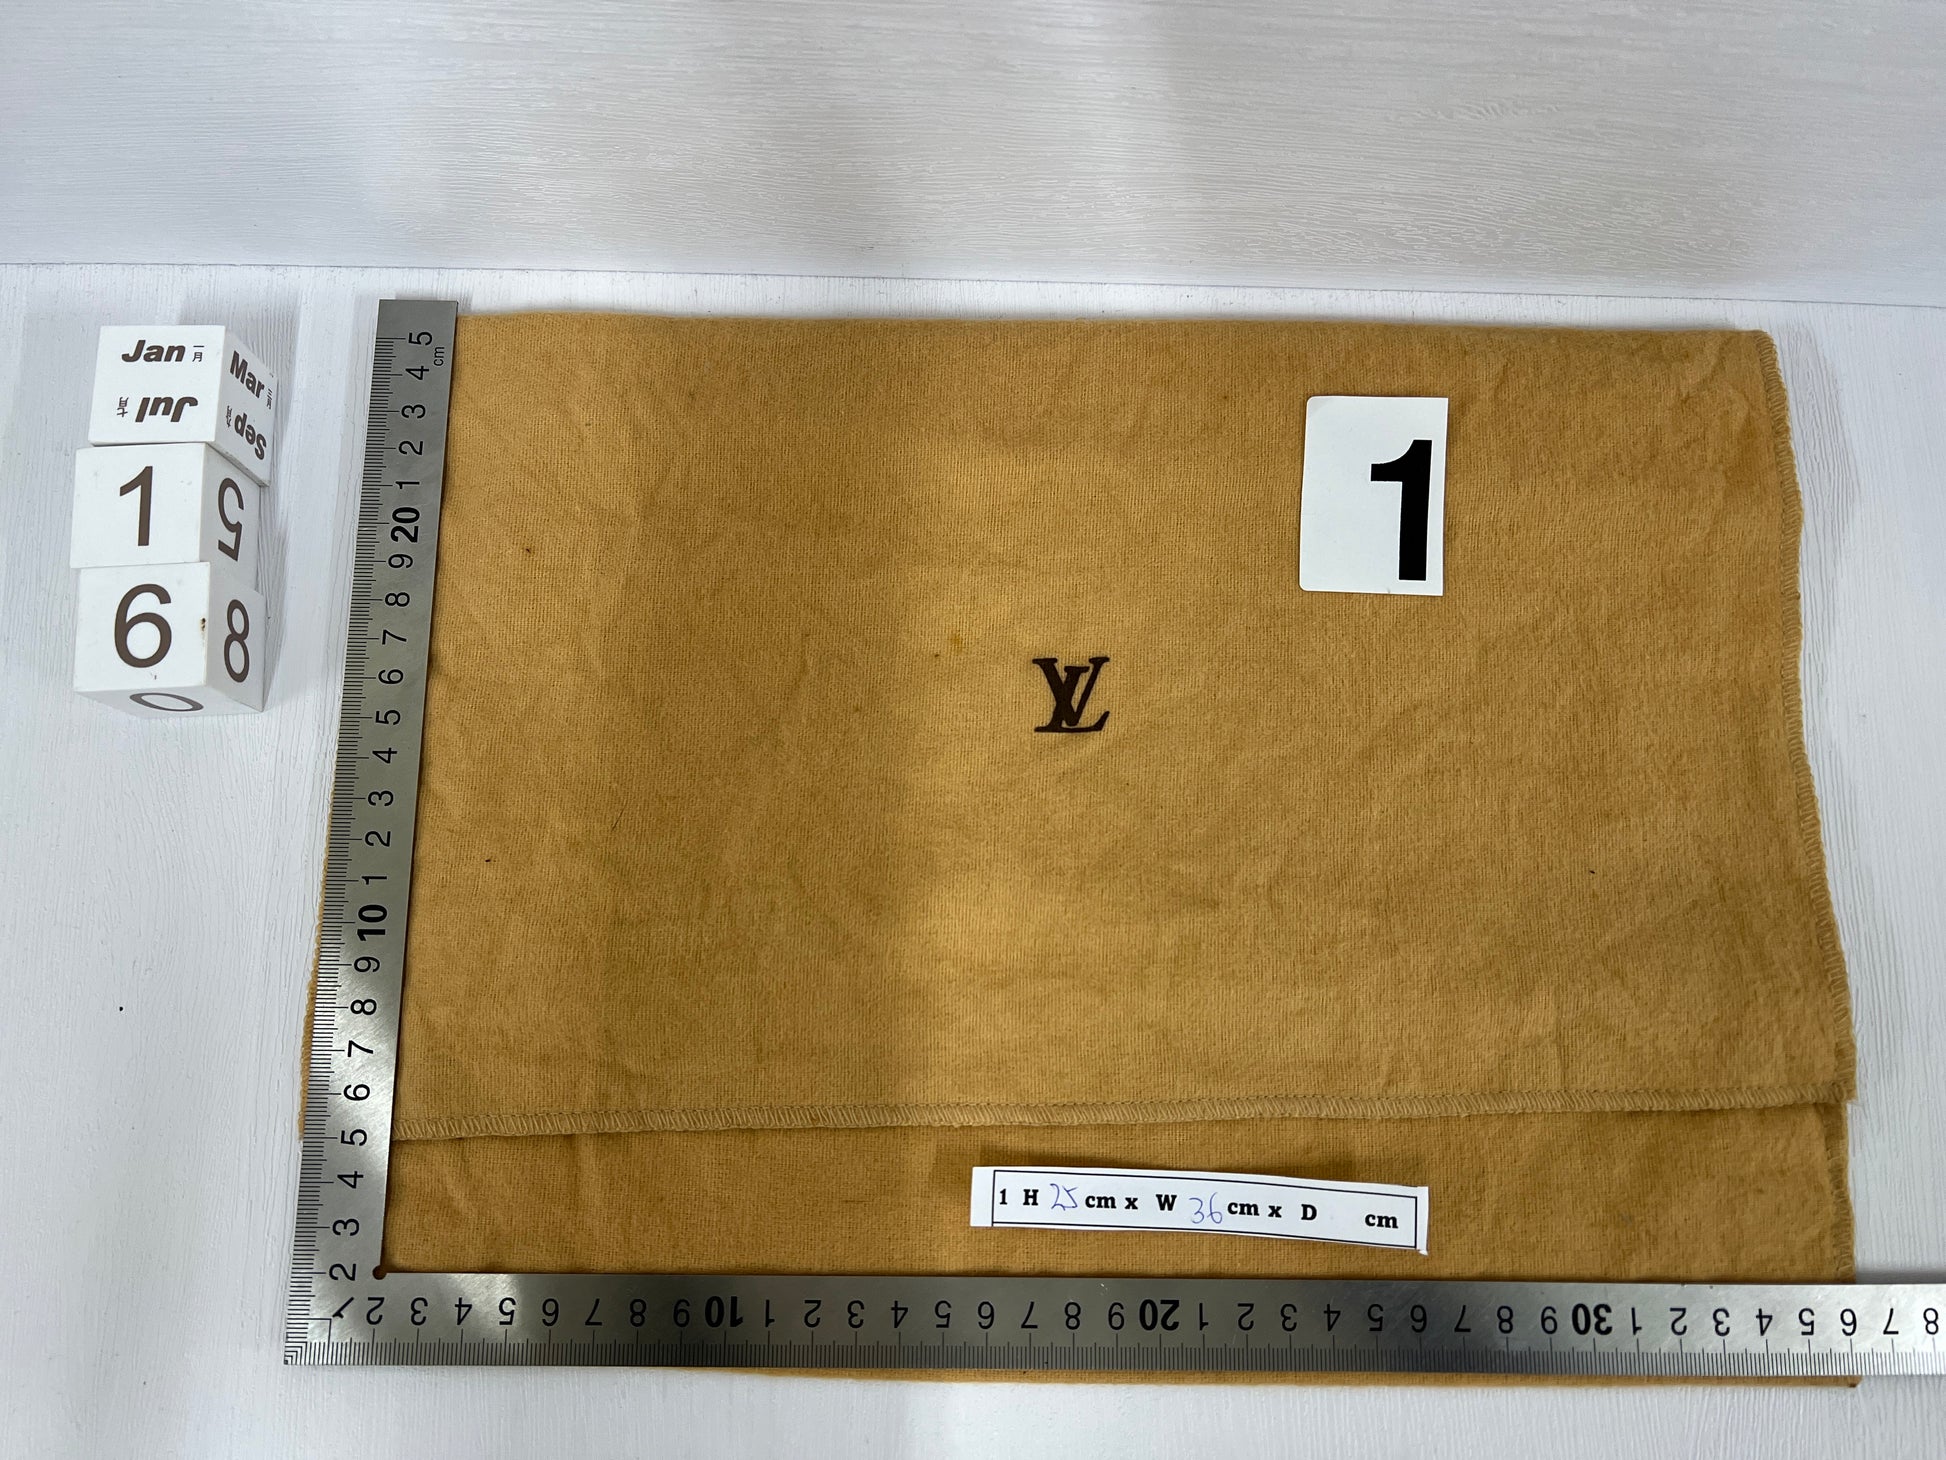 Louis Vuitton LV dust bag jewelly wallet bag watch handbag - 29JAN – Trendy  Ground